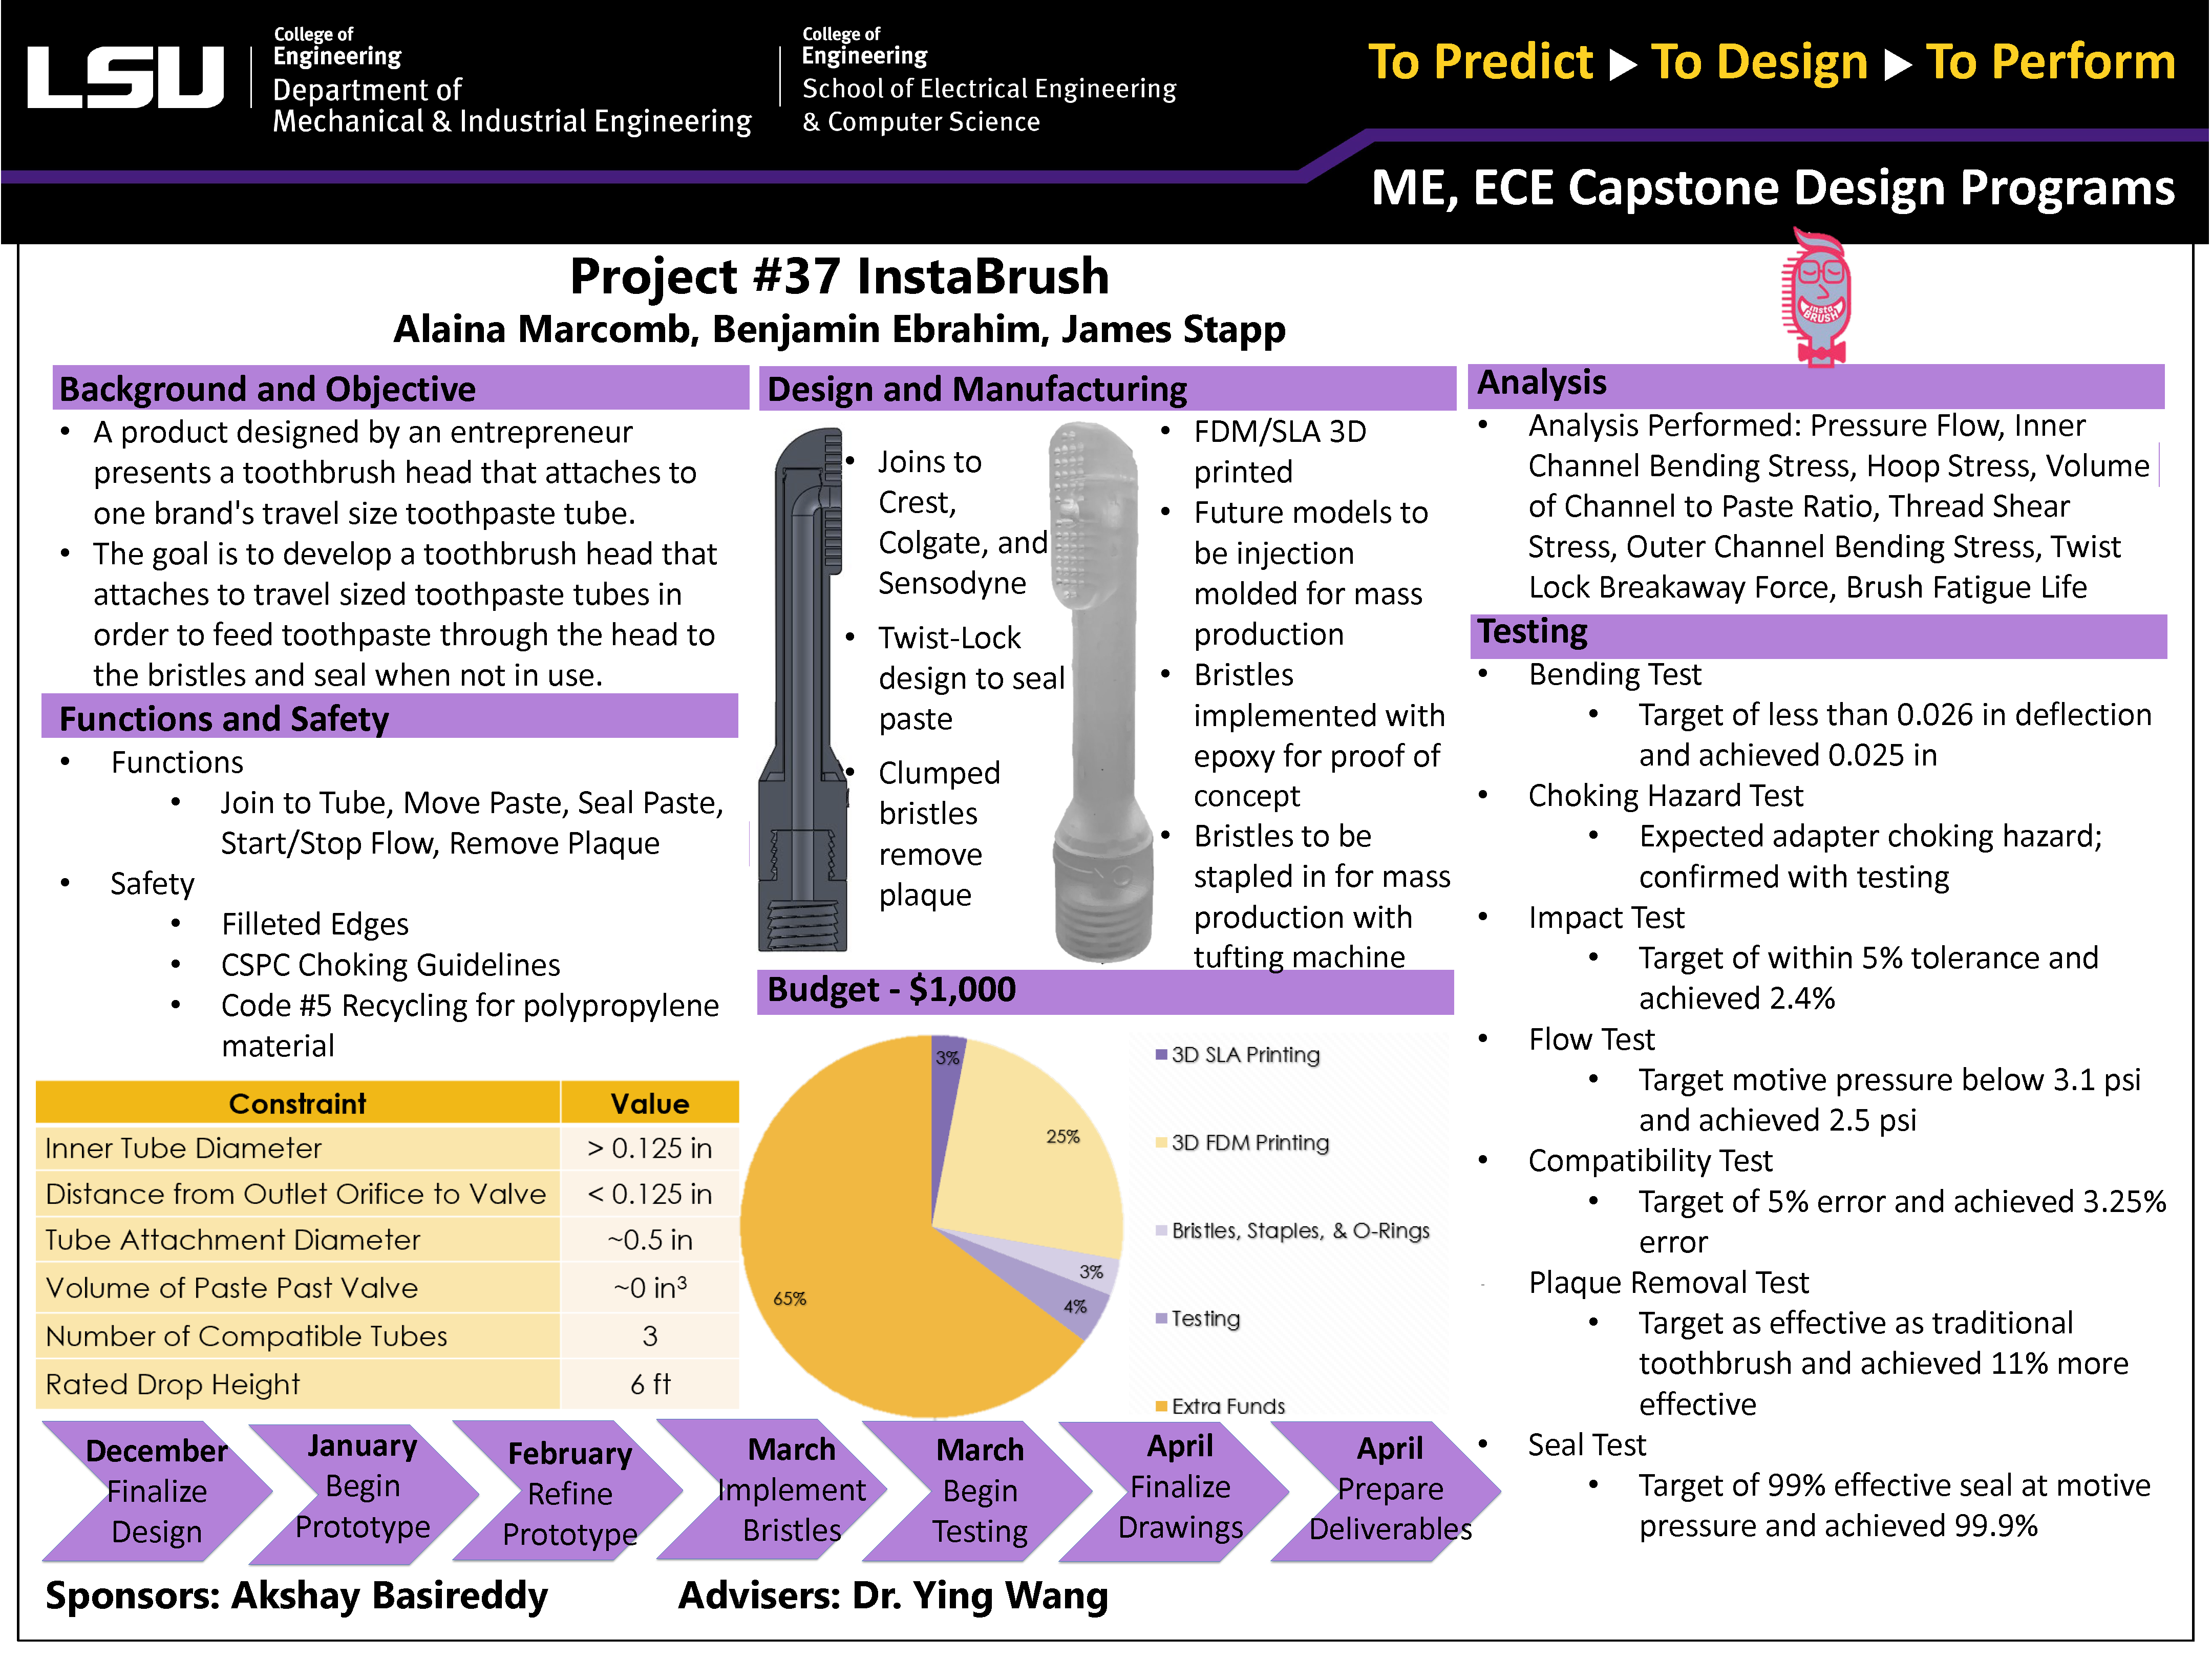 Project 37: Instabrush (2021)